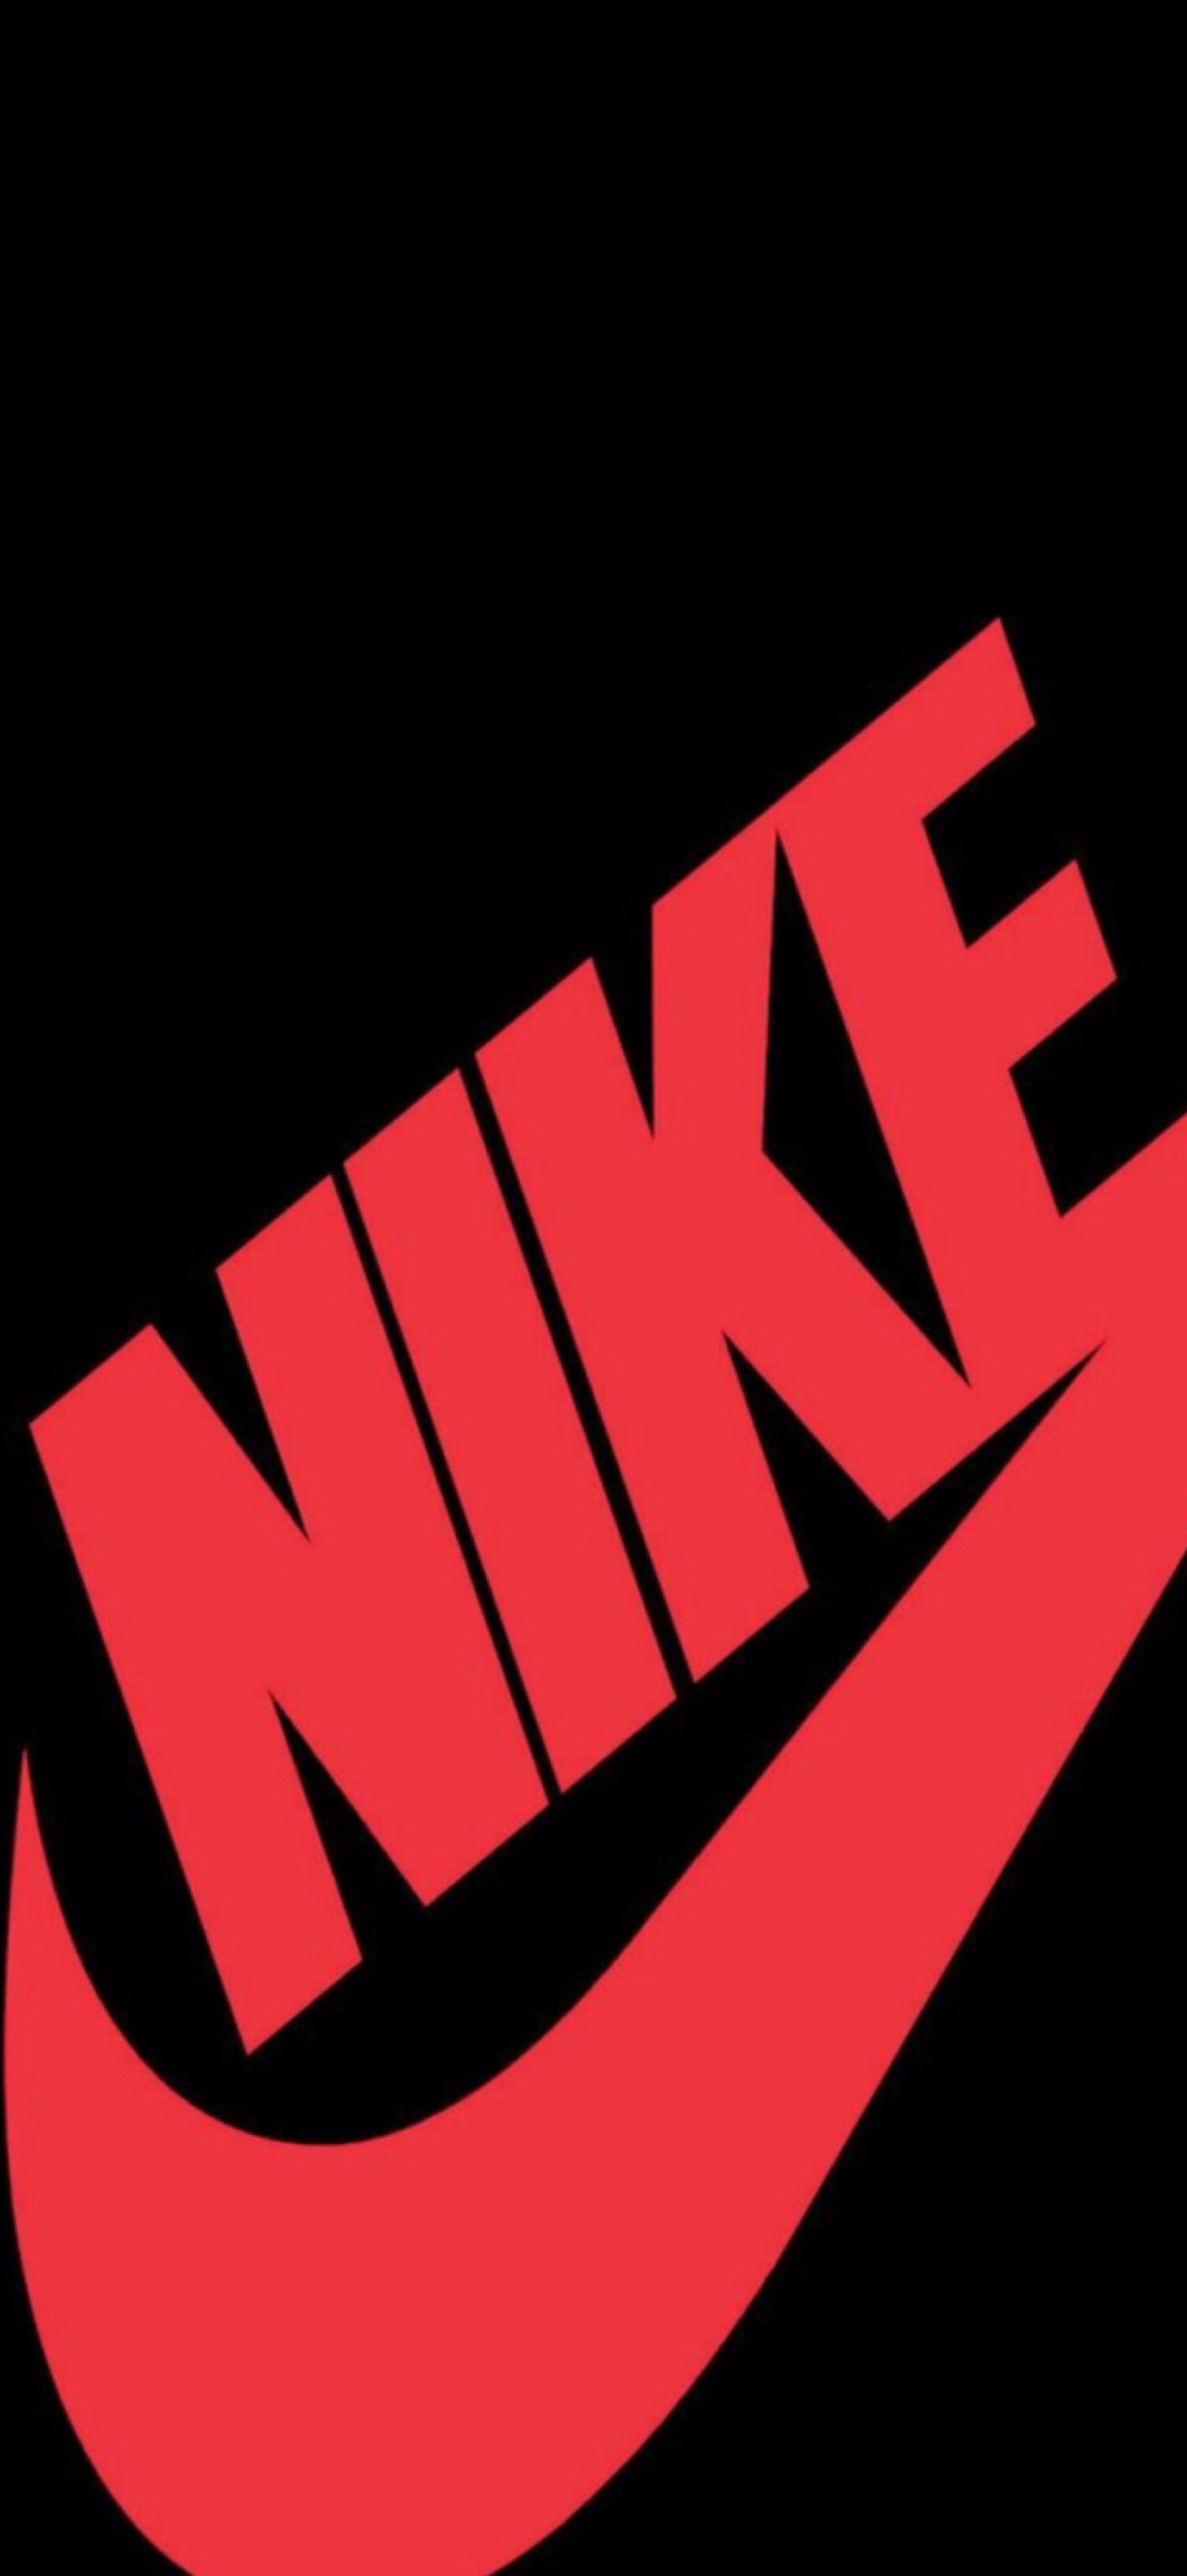 Wallpaper iPhone X logo. Nike logo wallpaper